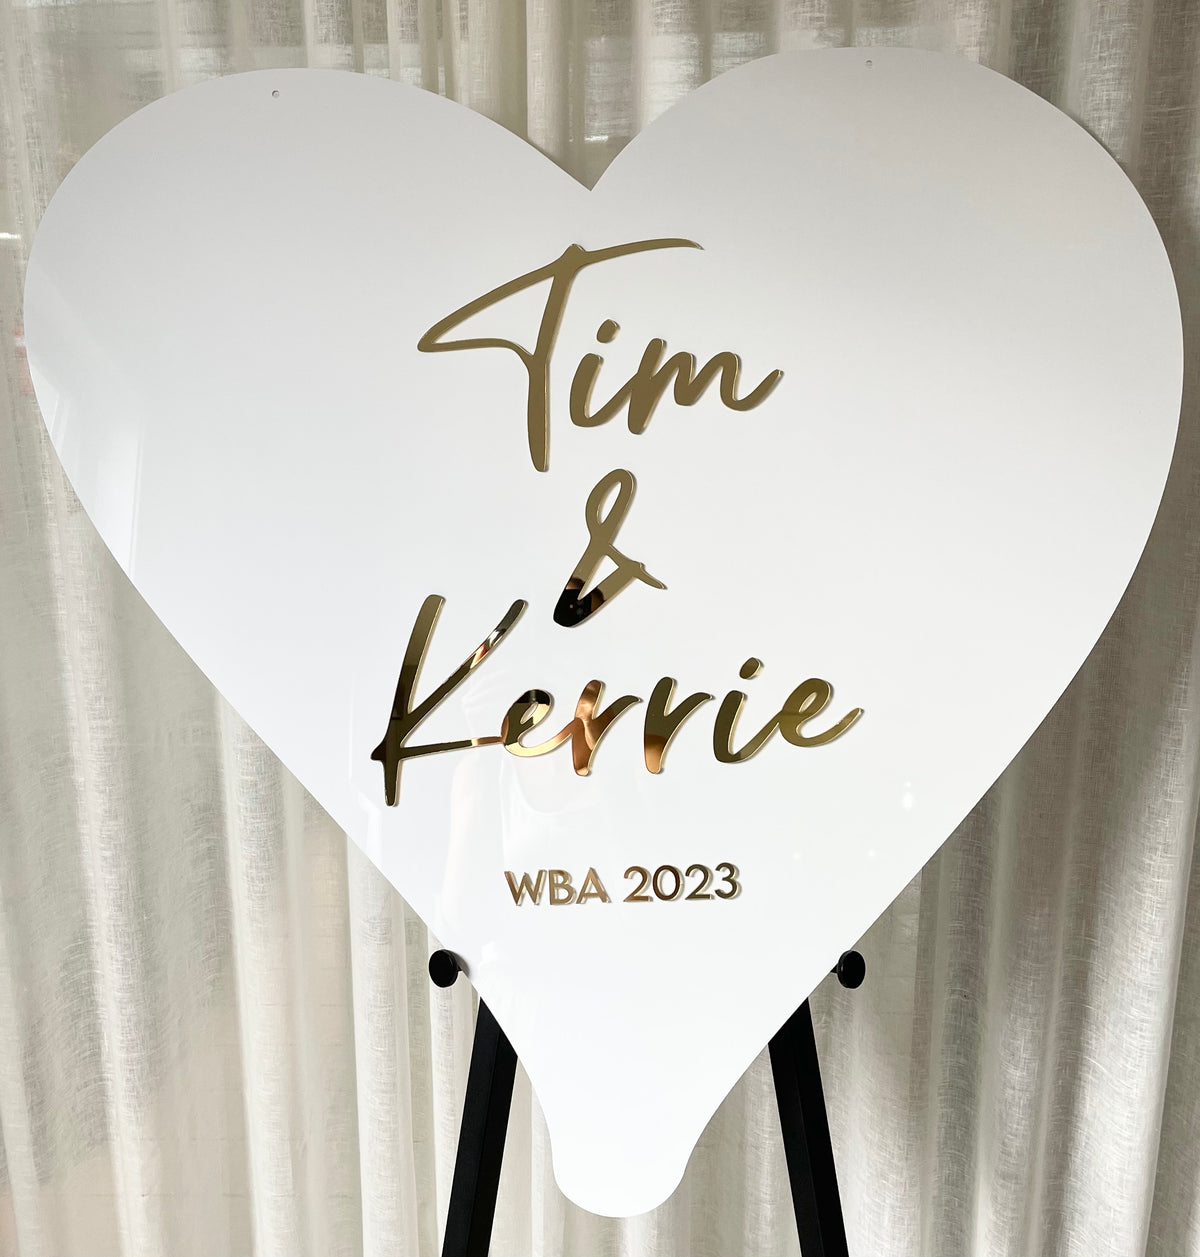 heart shaped wedding sign